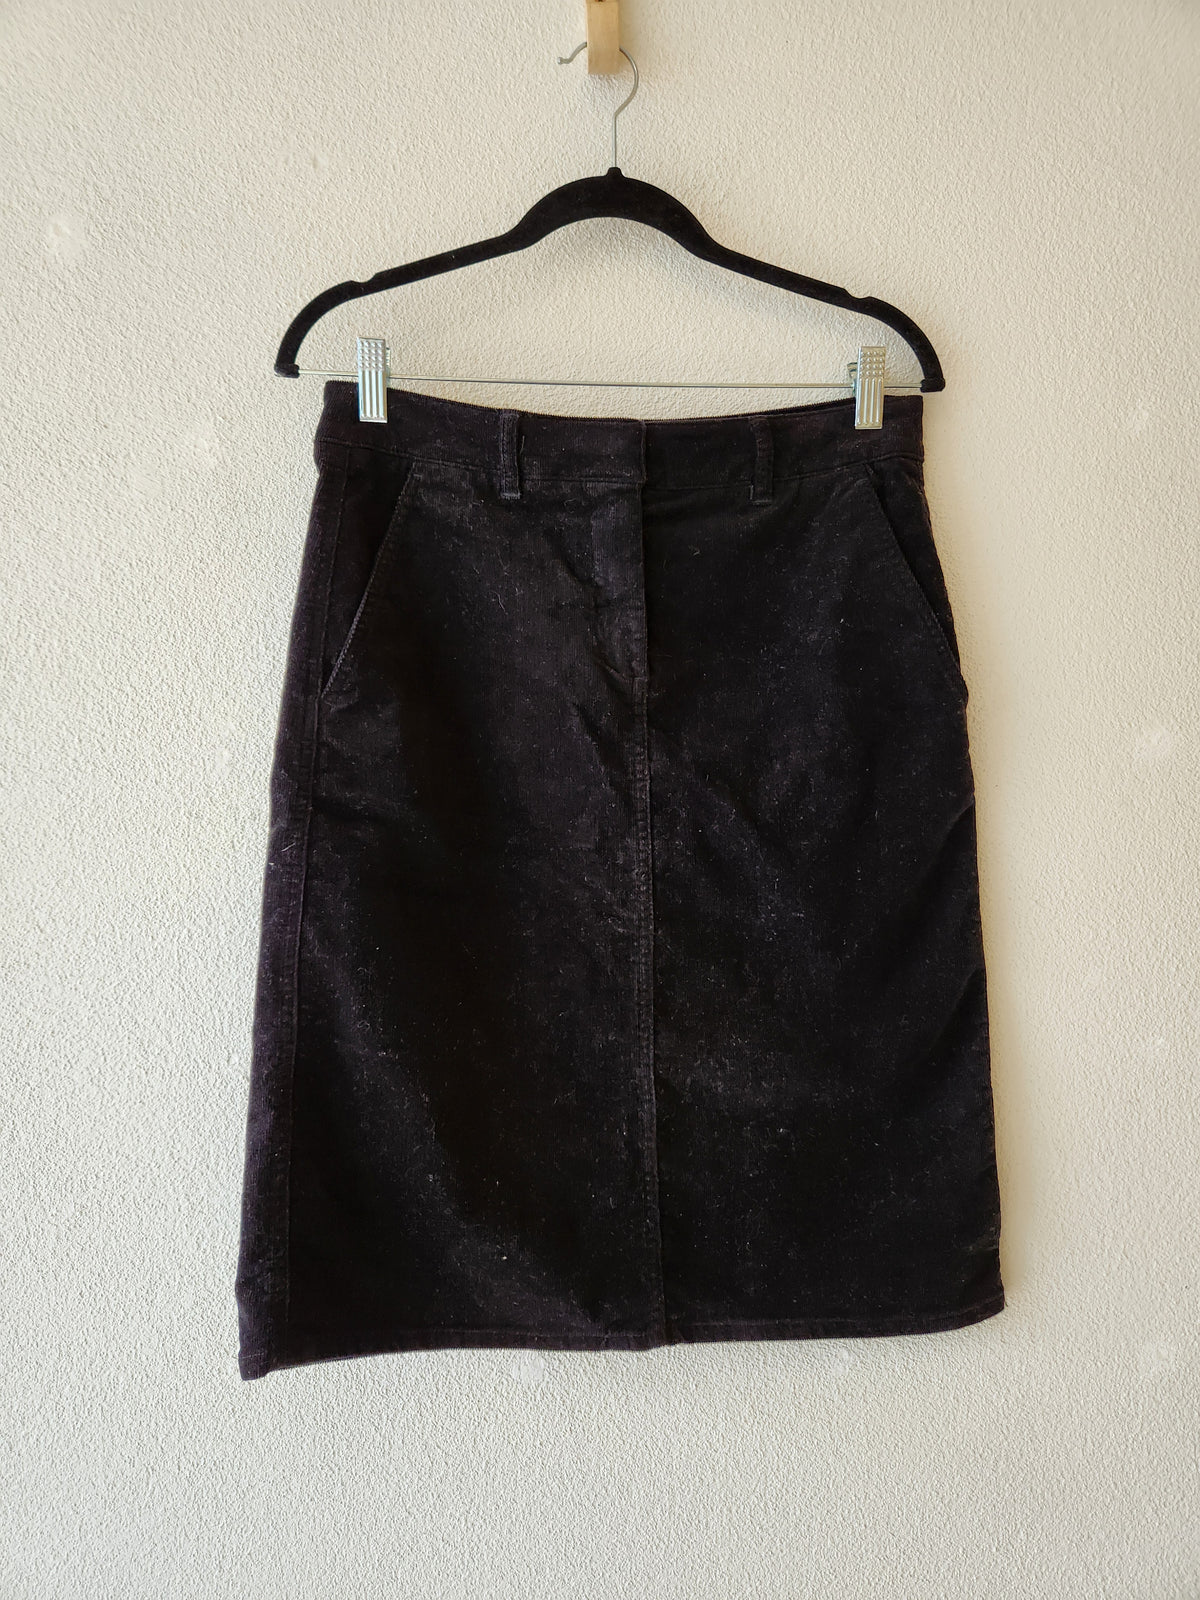 Sports craft Black corduroy skirt Skirt XS